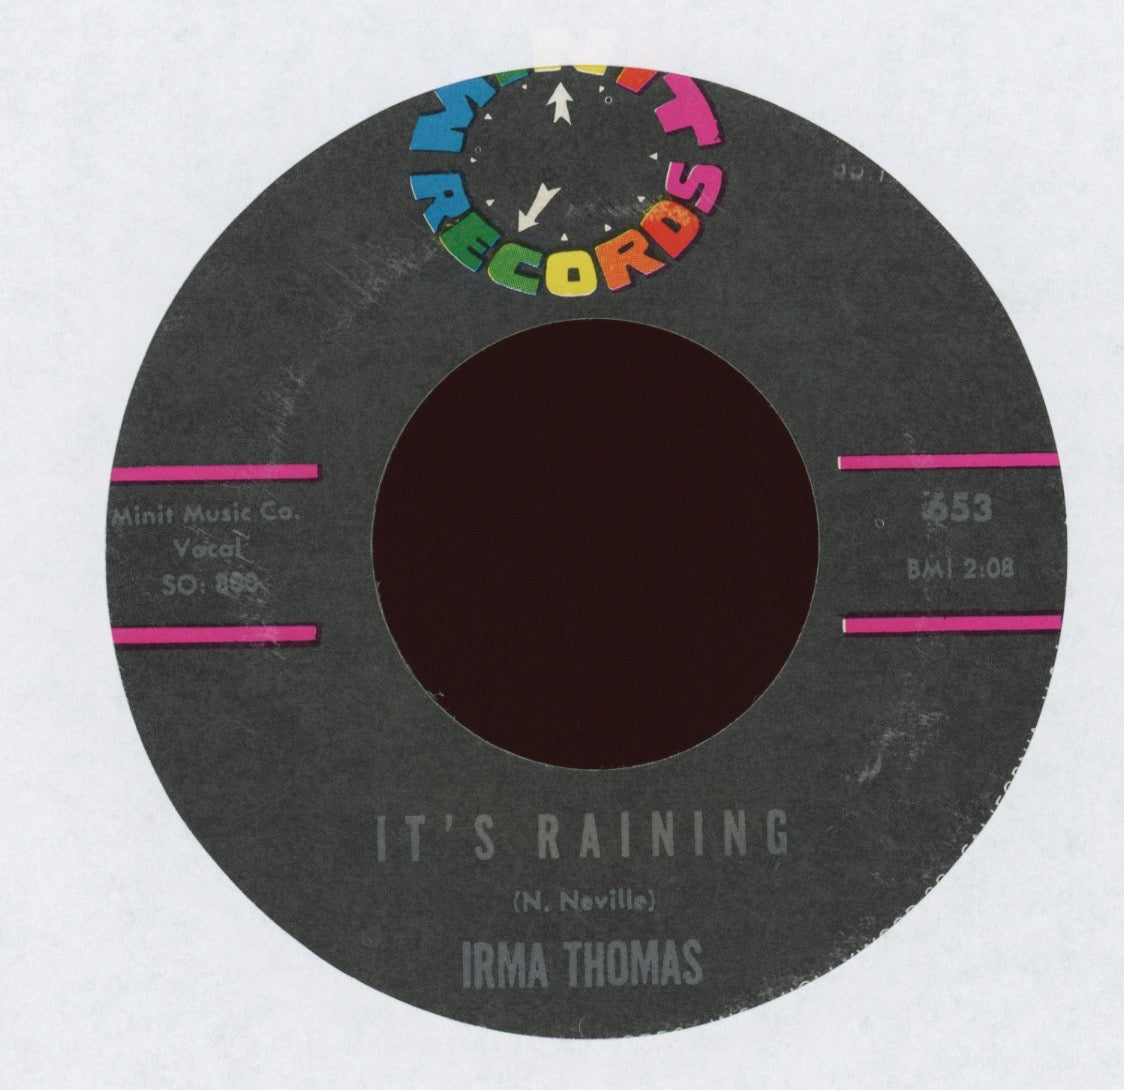 Irma Thomas - I Did My Part on Minit